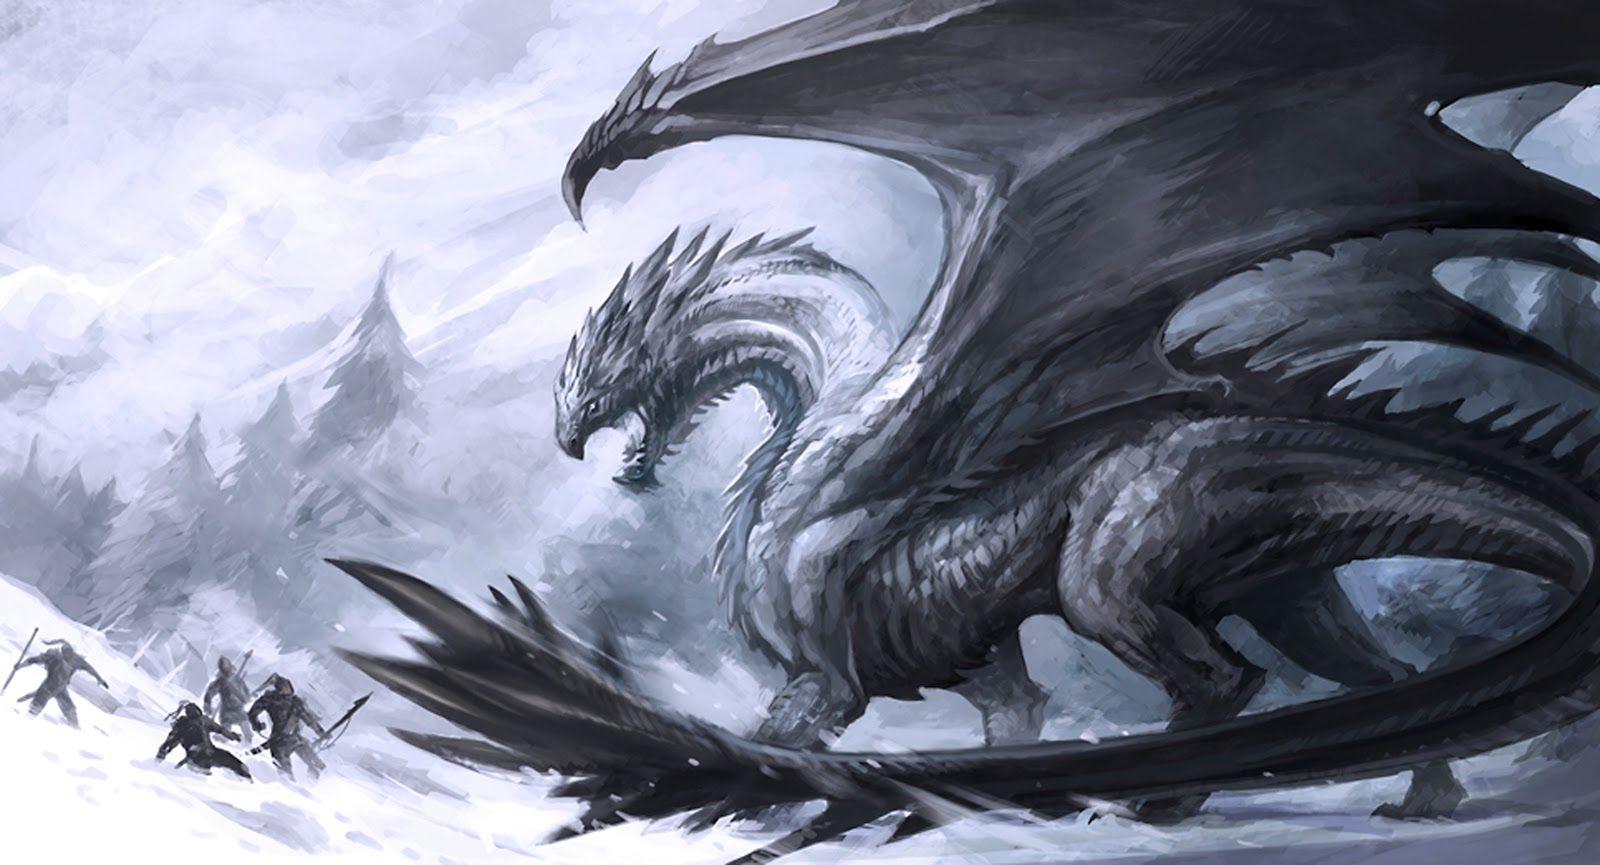 Roaring Dragon Wallpapers - Top Free Roaring Dragon Backgrounds ...